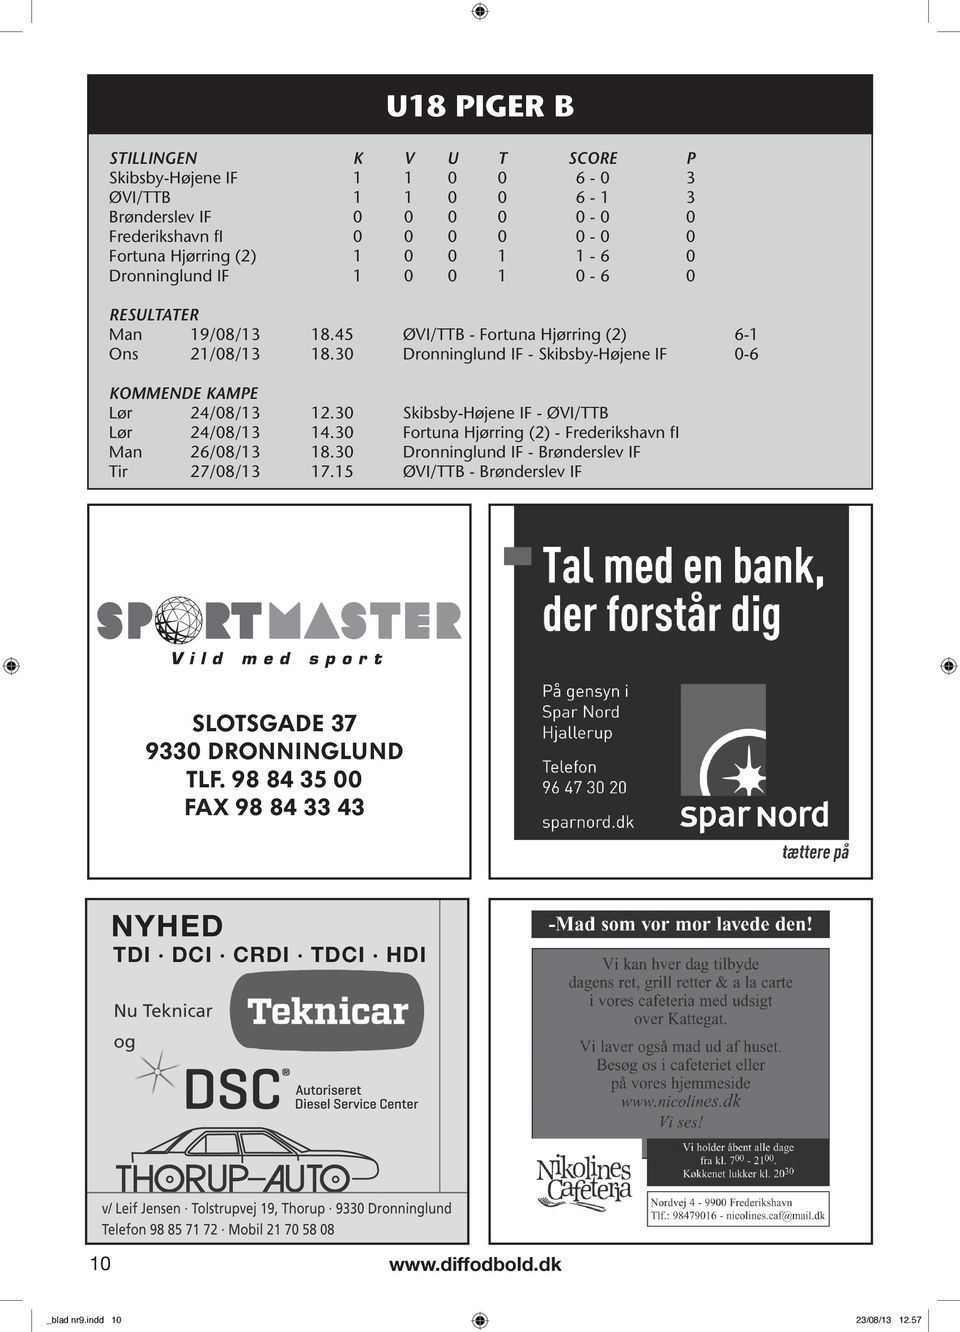 30 IF - Skibsby-Højene IF 0-6 KoMMenDe KAMPe Lør 24/08/13 12.30 Skibsby-Højene IF - ØVI/TTB Lør 24/08/13 14.